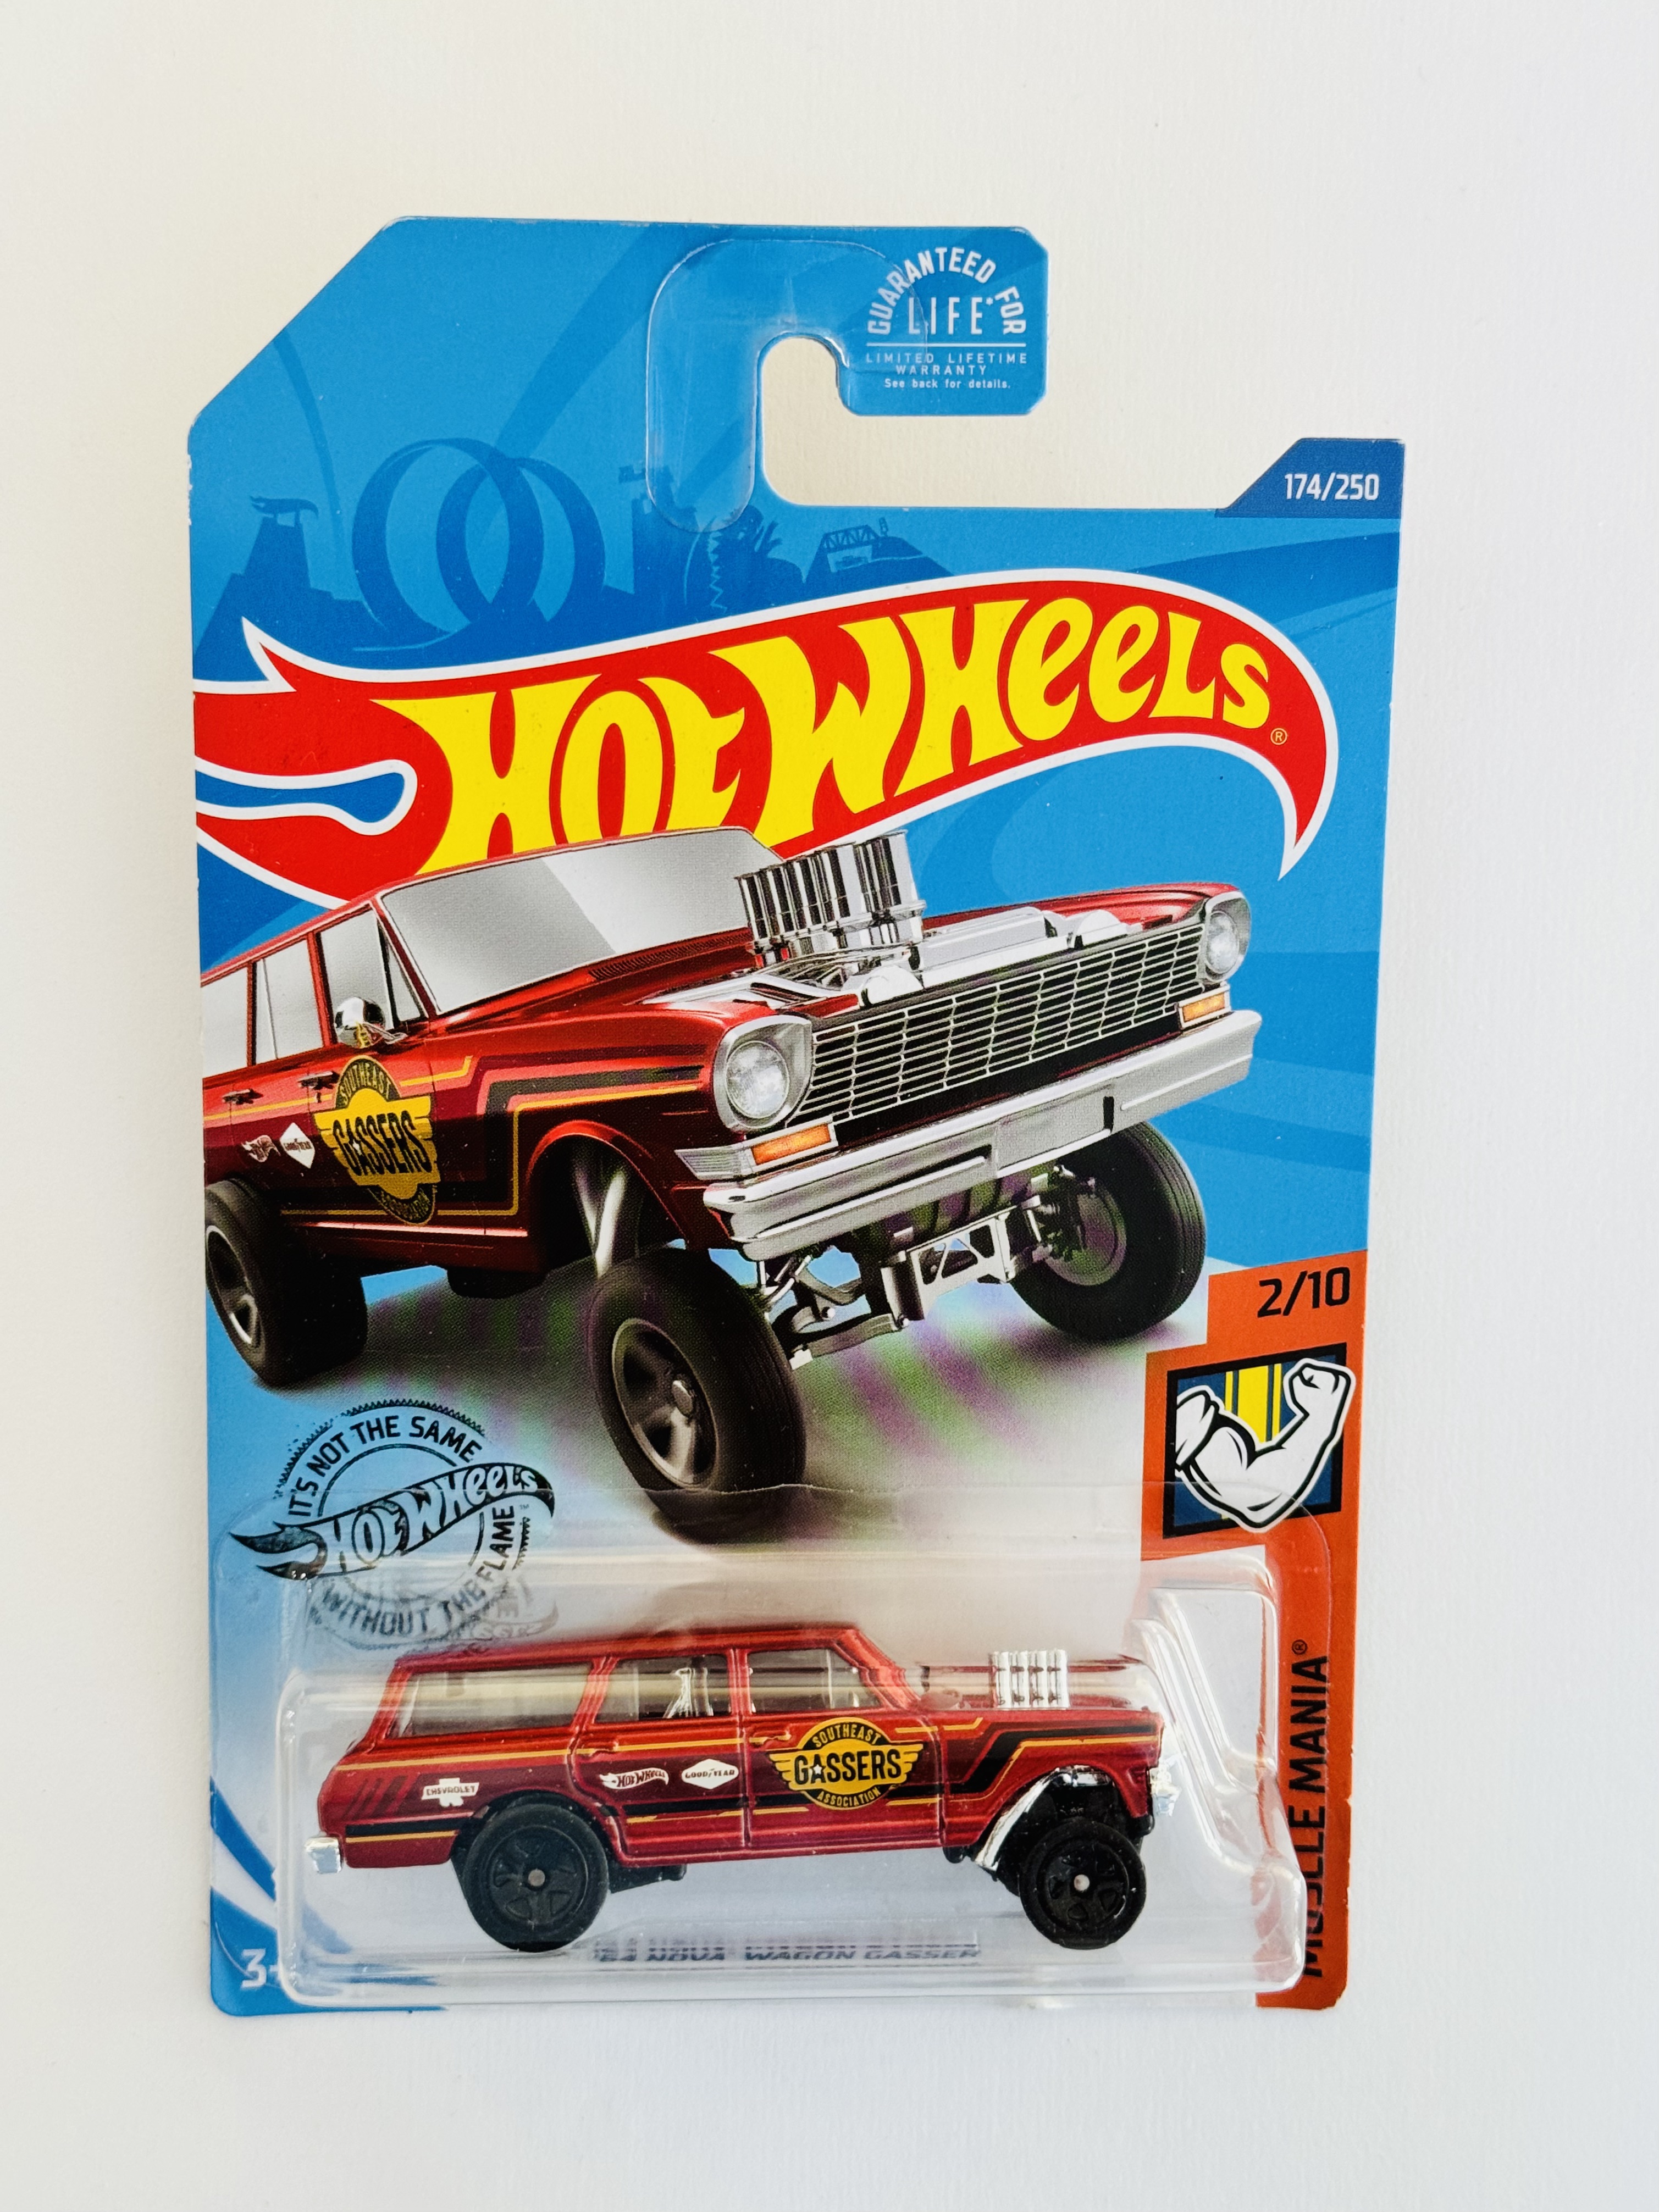 Hot Wheels #174 '64 Nova Wagon Gasser - Red